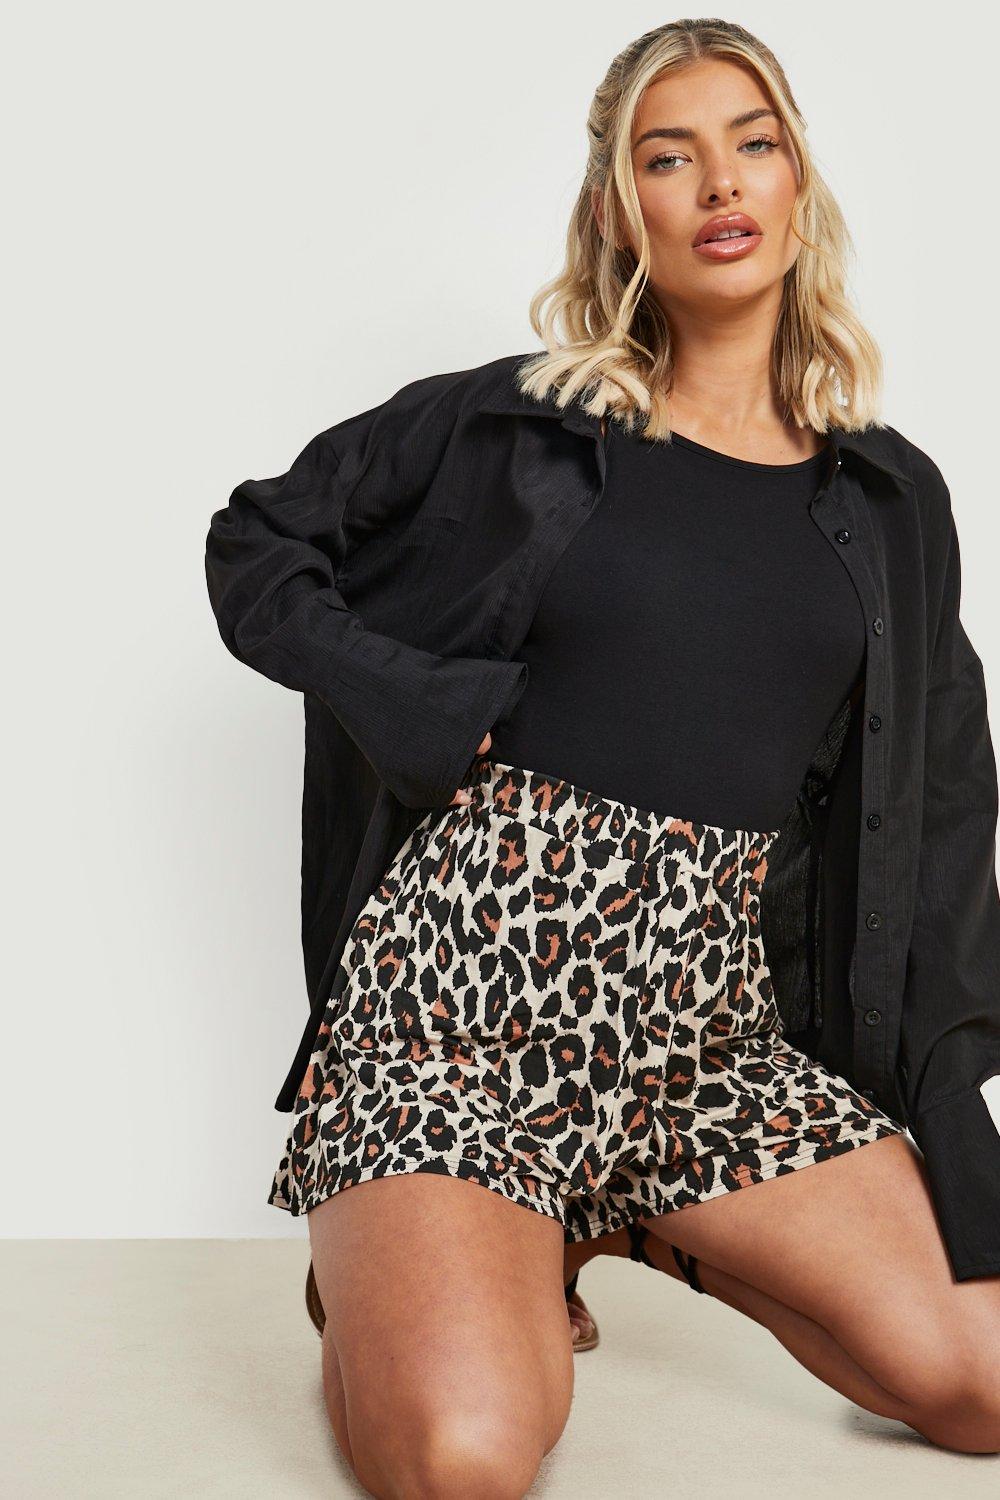 Boohoo Macie Leopard Print Roll Hem Safari Style Shorts, $26, BooHoo